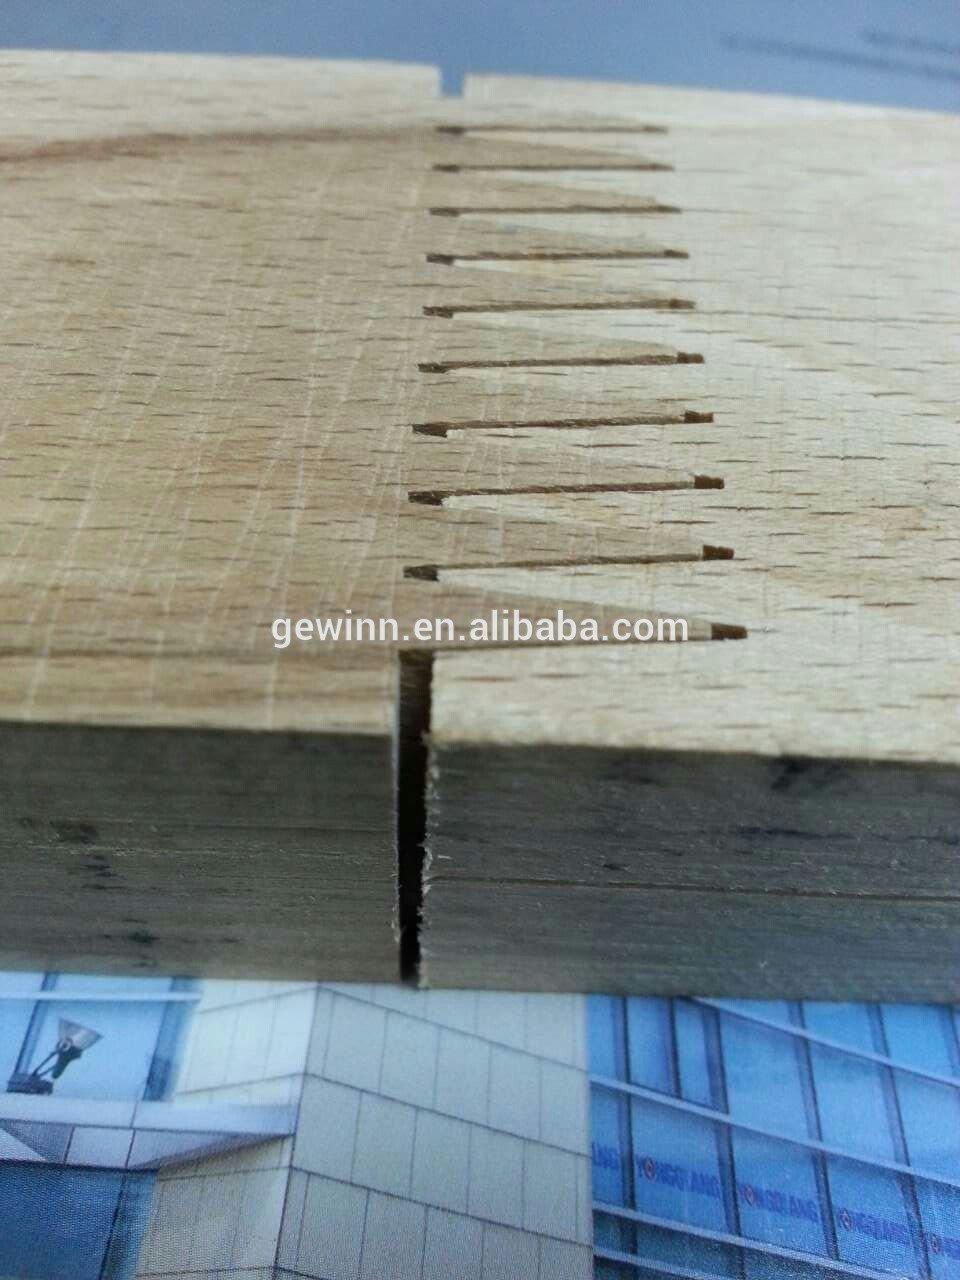 sawmill manufacturers cutting panel Gewinn Brand portable sawmill for sale